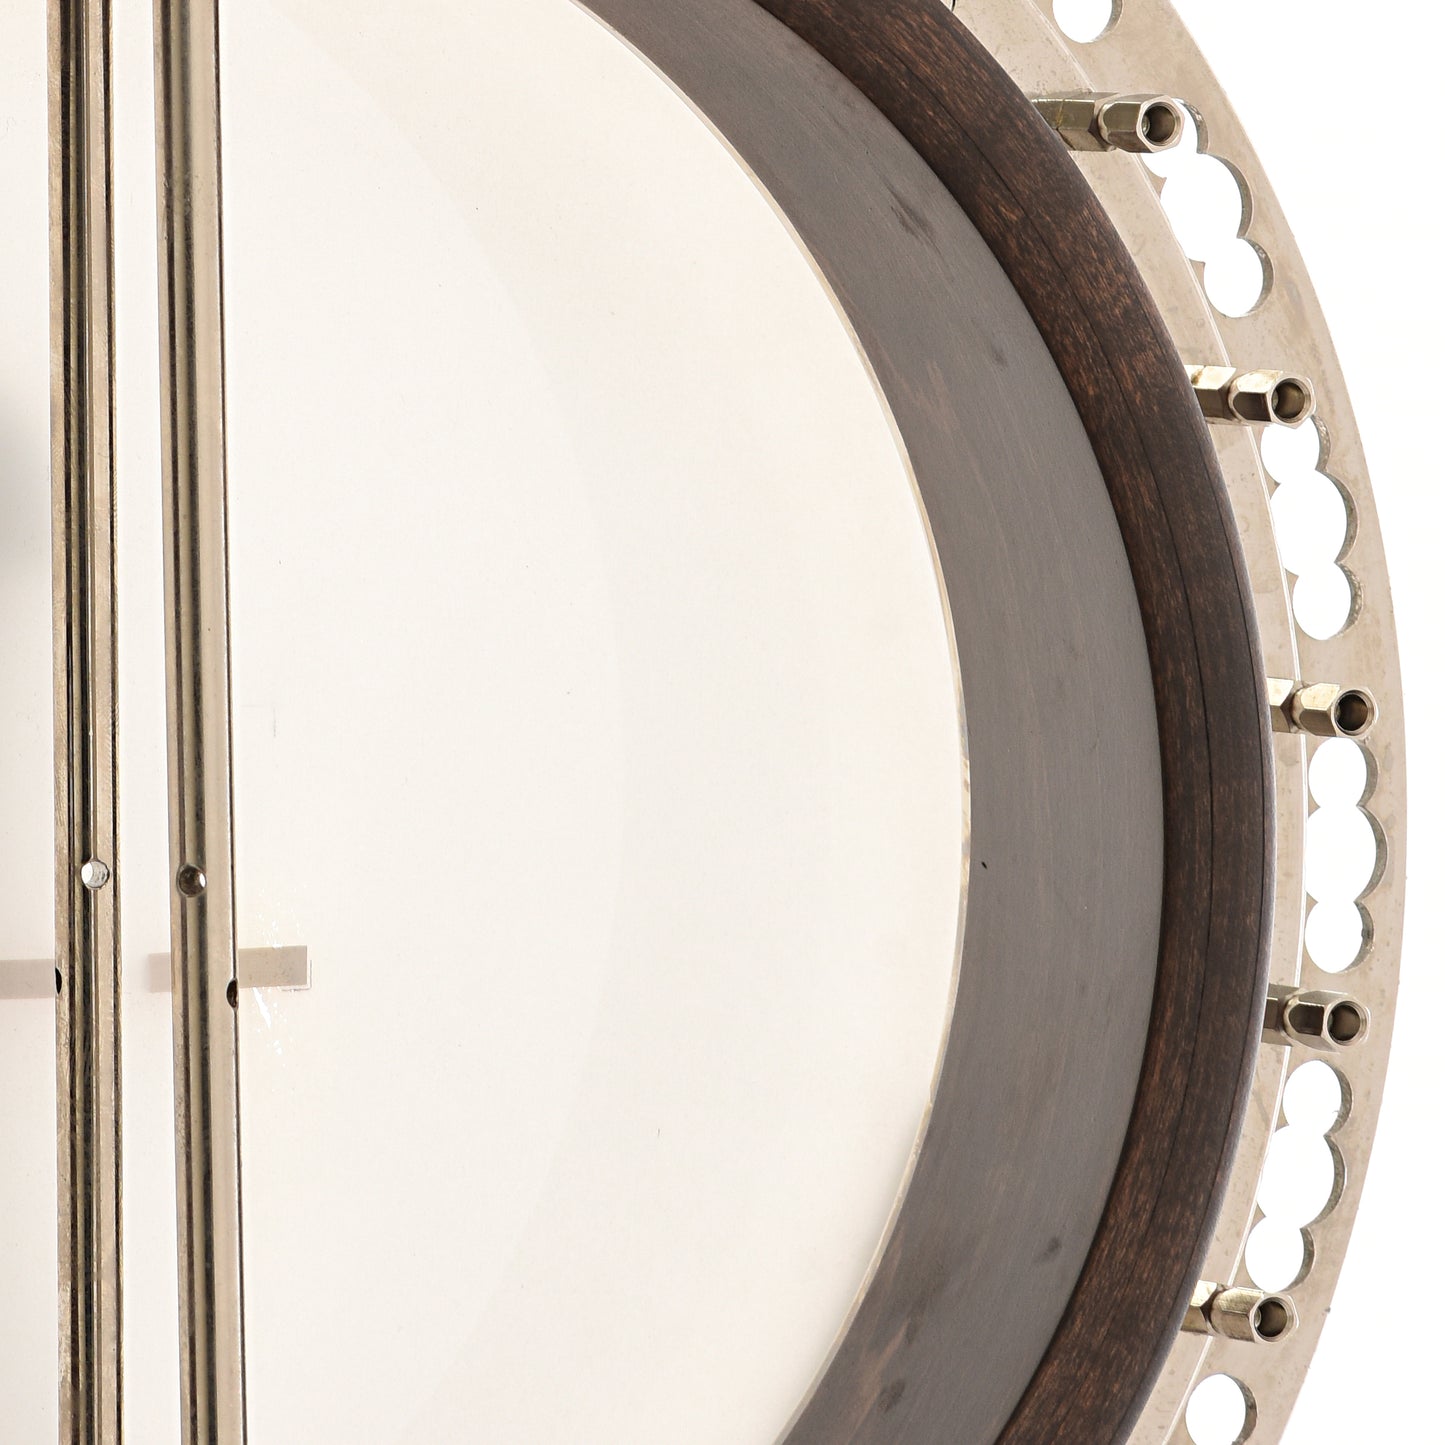 Inside rim of Deering Hartford 24 Resonator Banjo (2010)